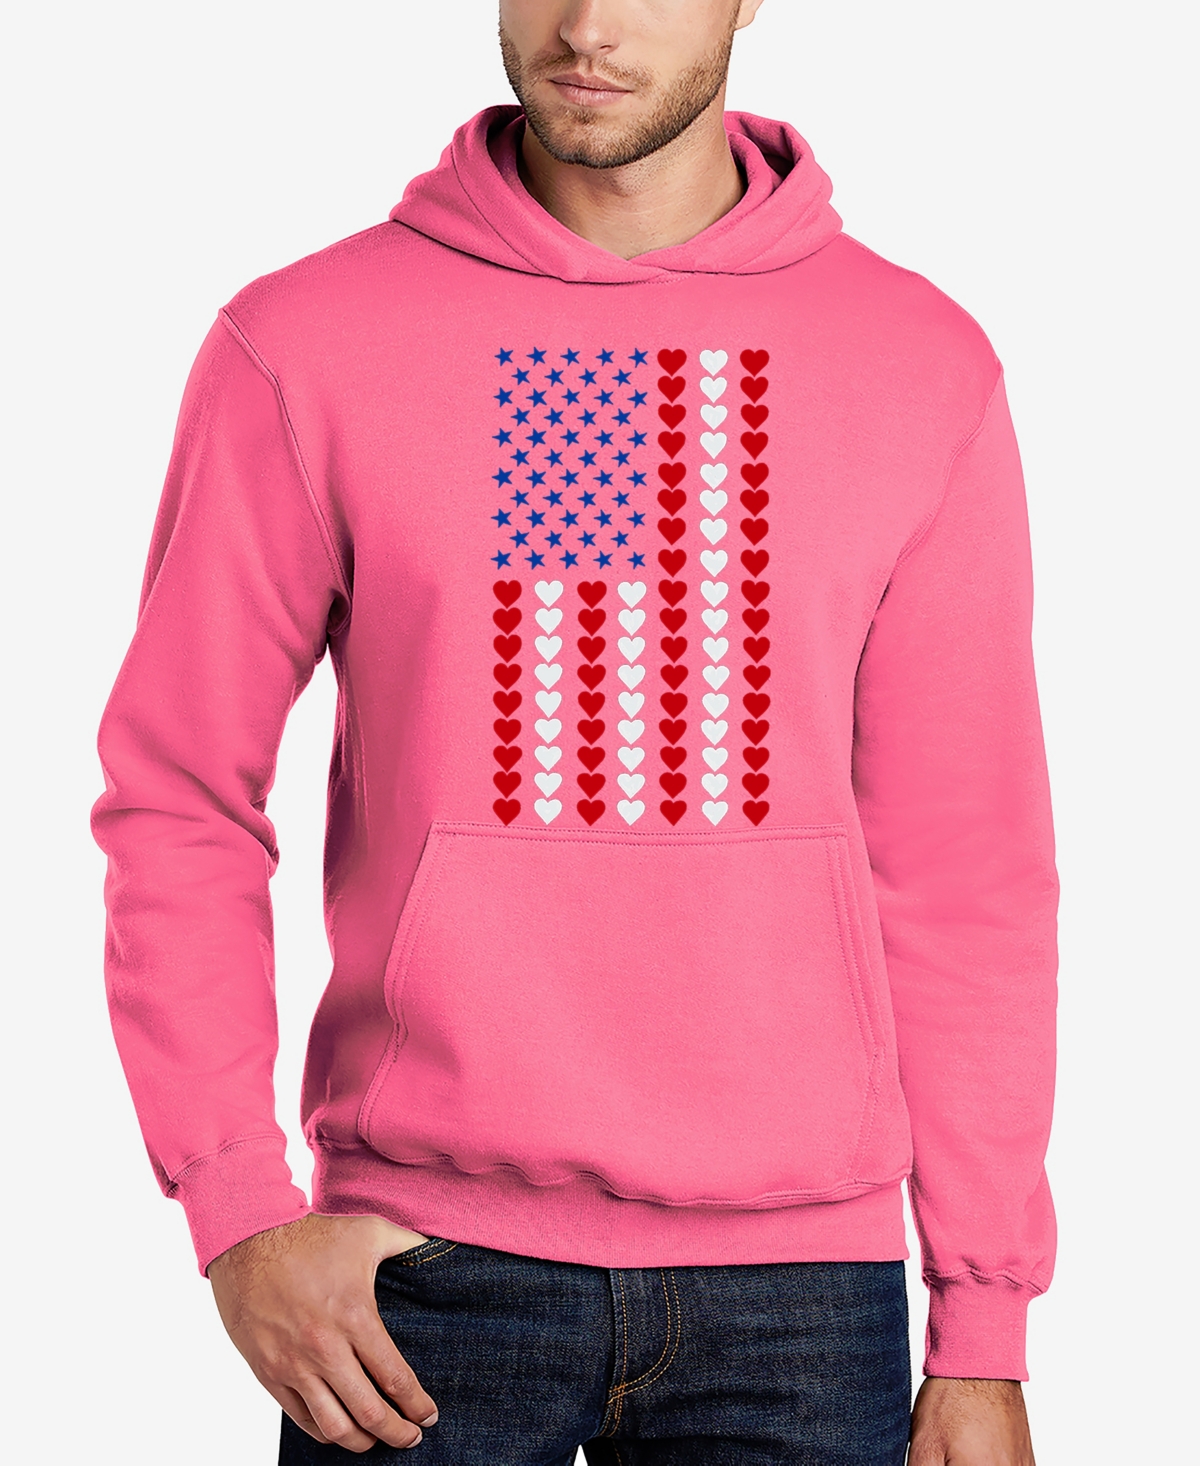 Heart Flag - Men's Word Art Hooded Sweatshirt - Pink